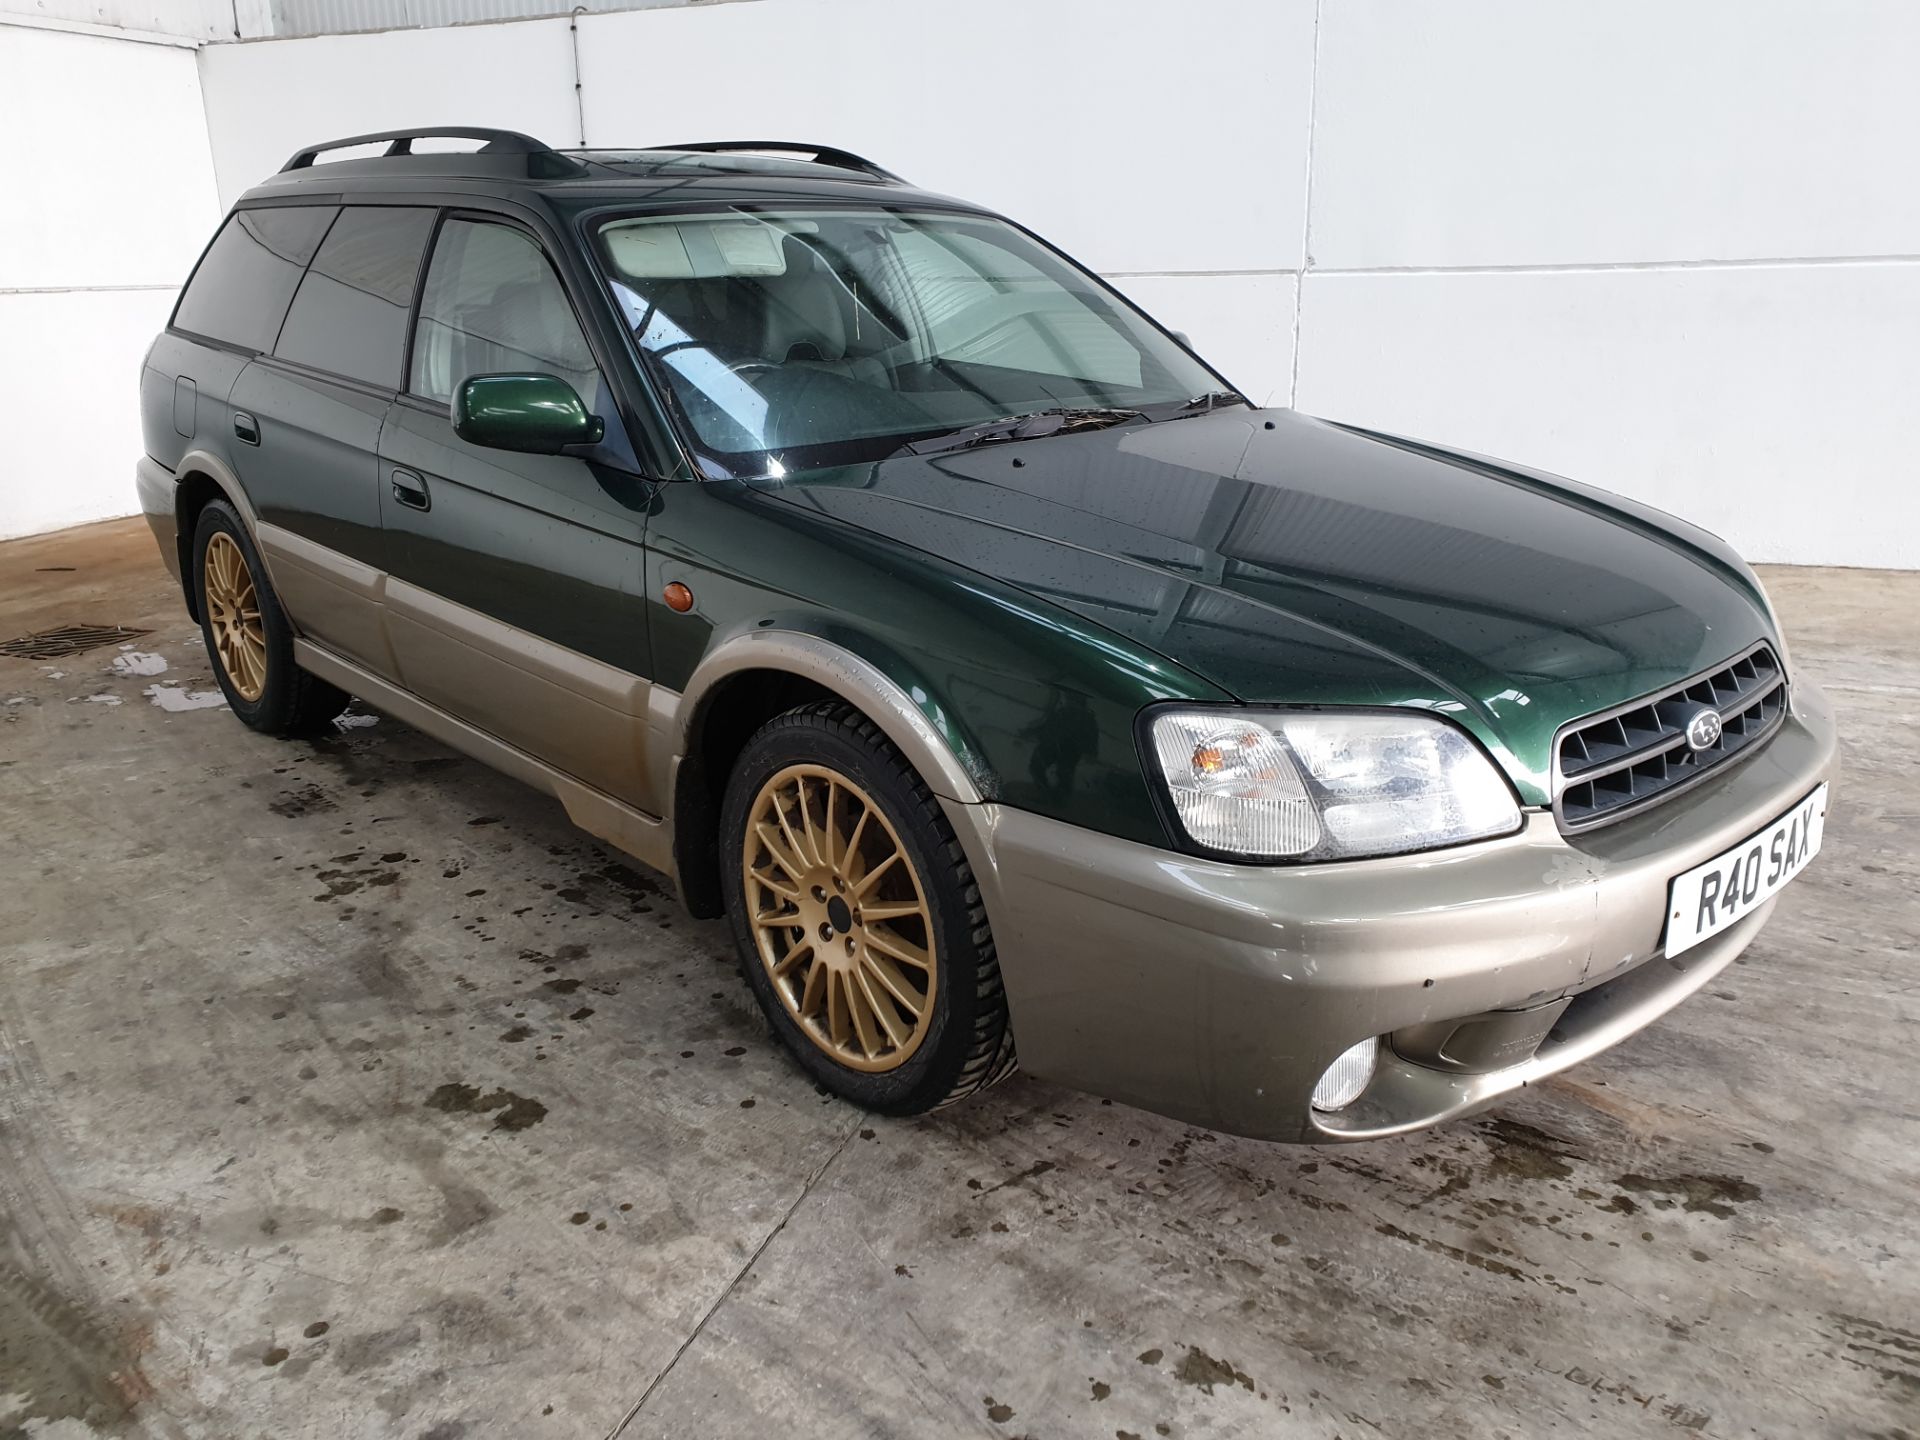 1998 Subaru Legacy estate